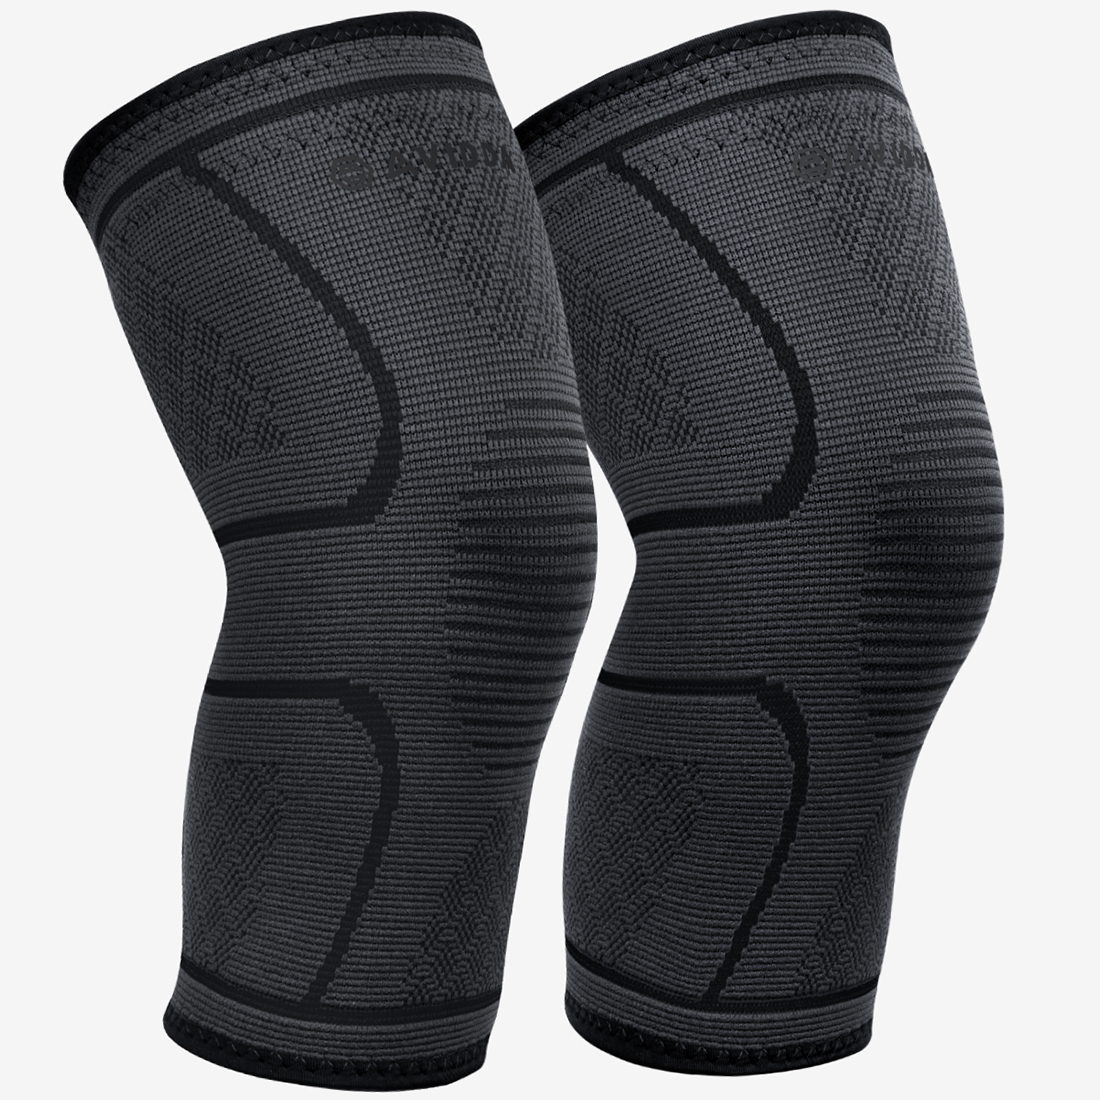 AVIDDA Knee Support Brace 2 Pack - Compression Knee Sleeves for